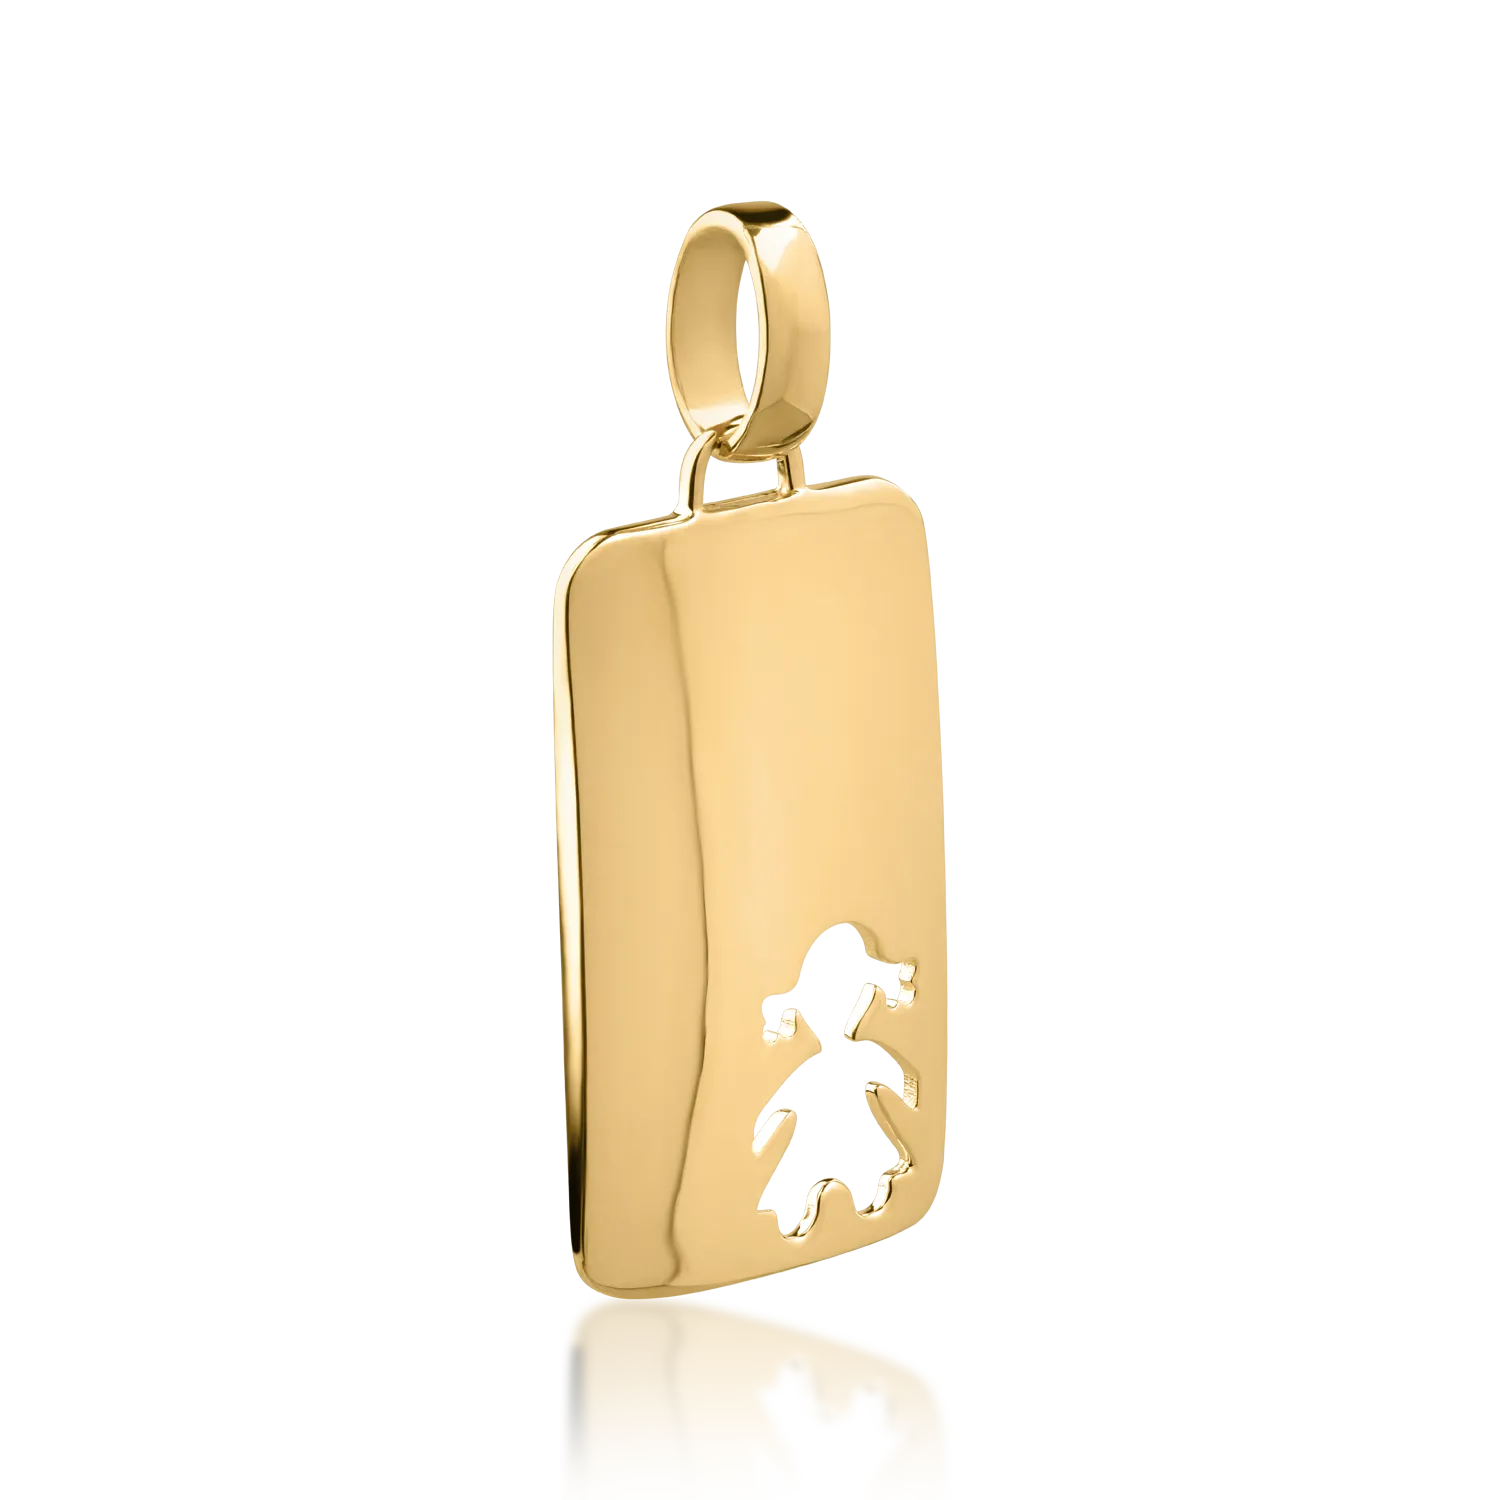 14K yellow gold pendant